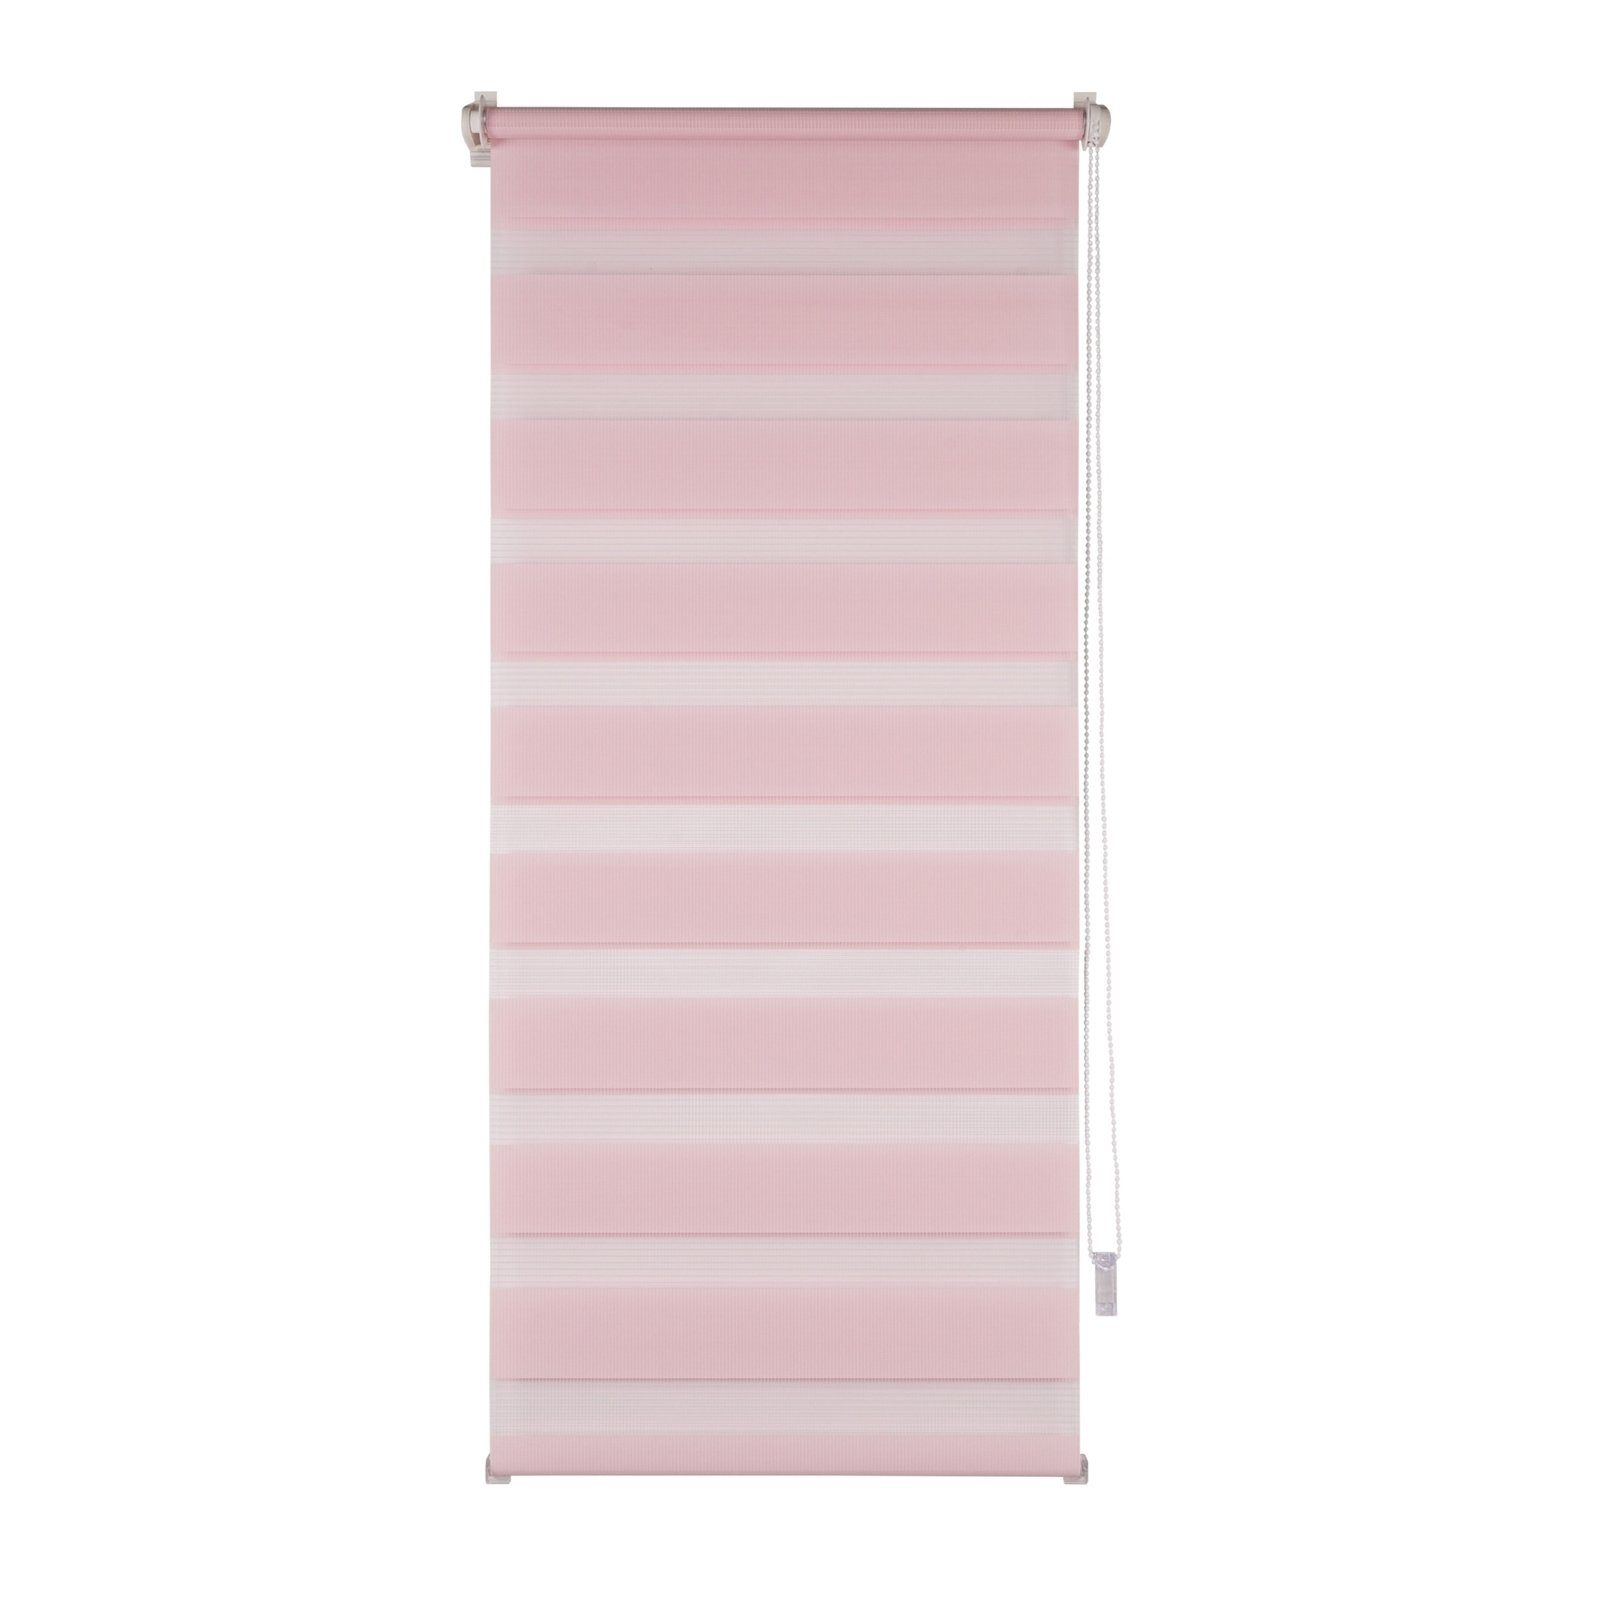 Doppelrollo Doppelrollo uni 60 x 150 Pink Bohren, Klemmfix halbtransparent, ohne HTI-Living, Marisol